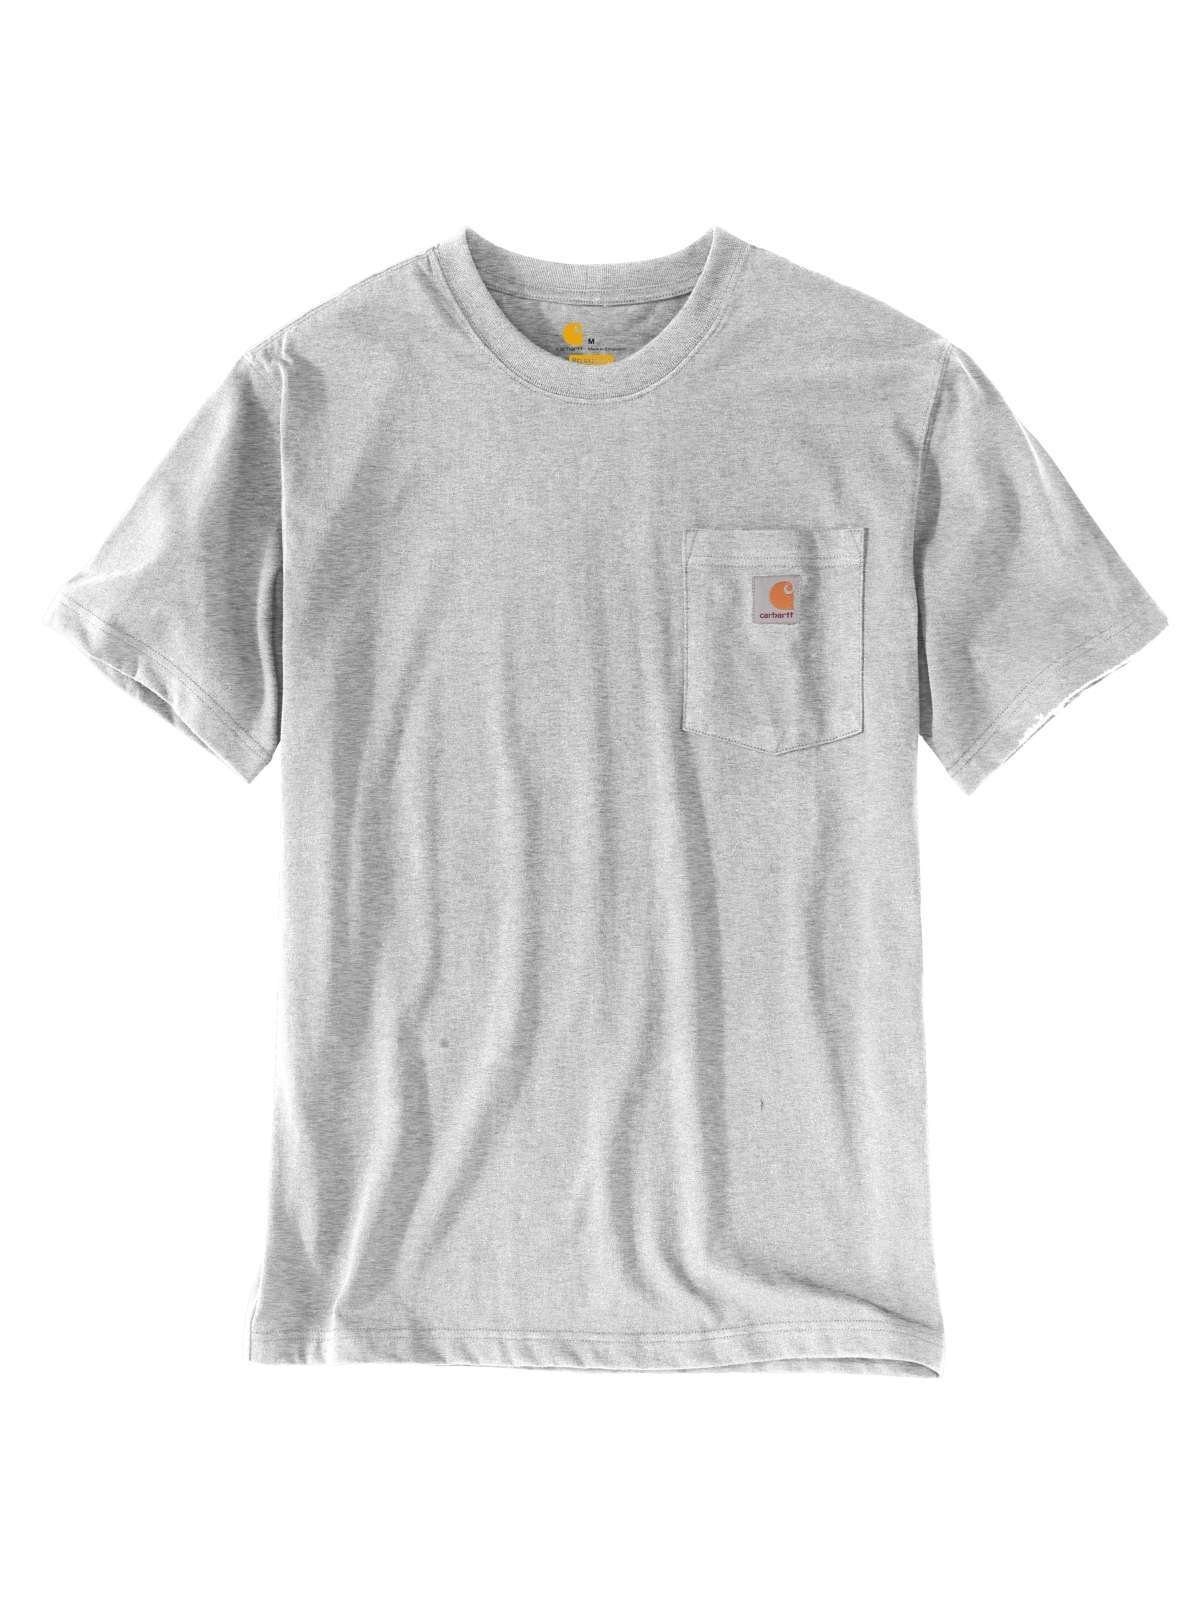 Carhartt T-Shirt GREY Carhartt T-Shirt HEATHER grau